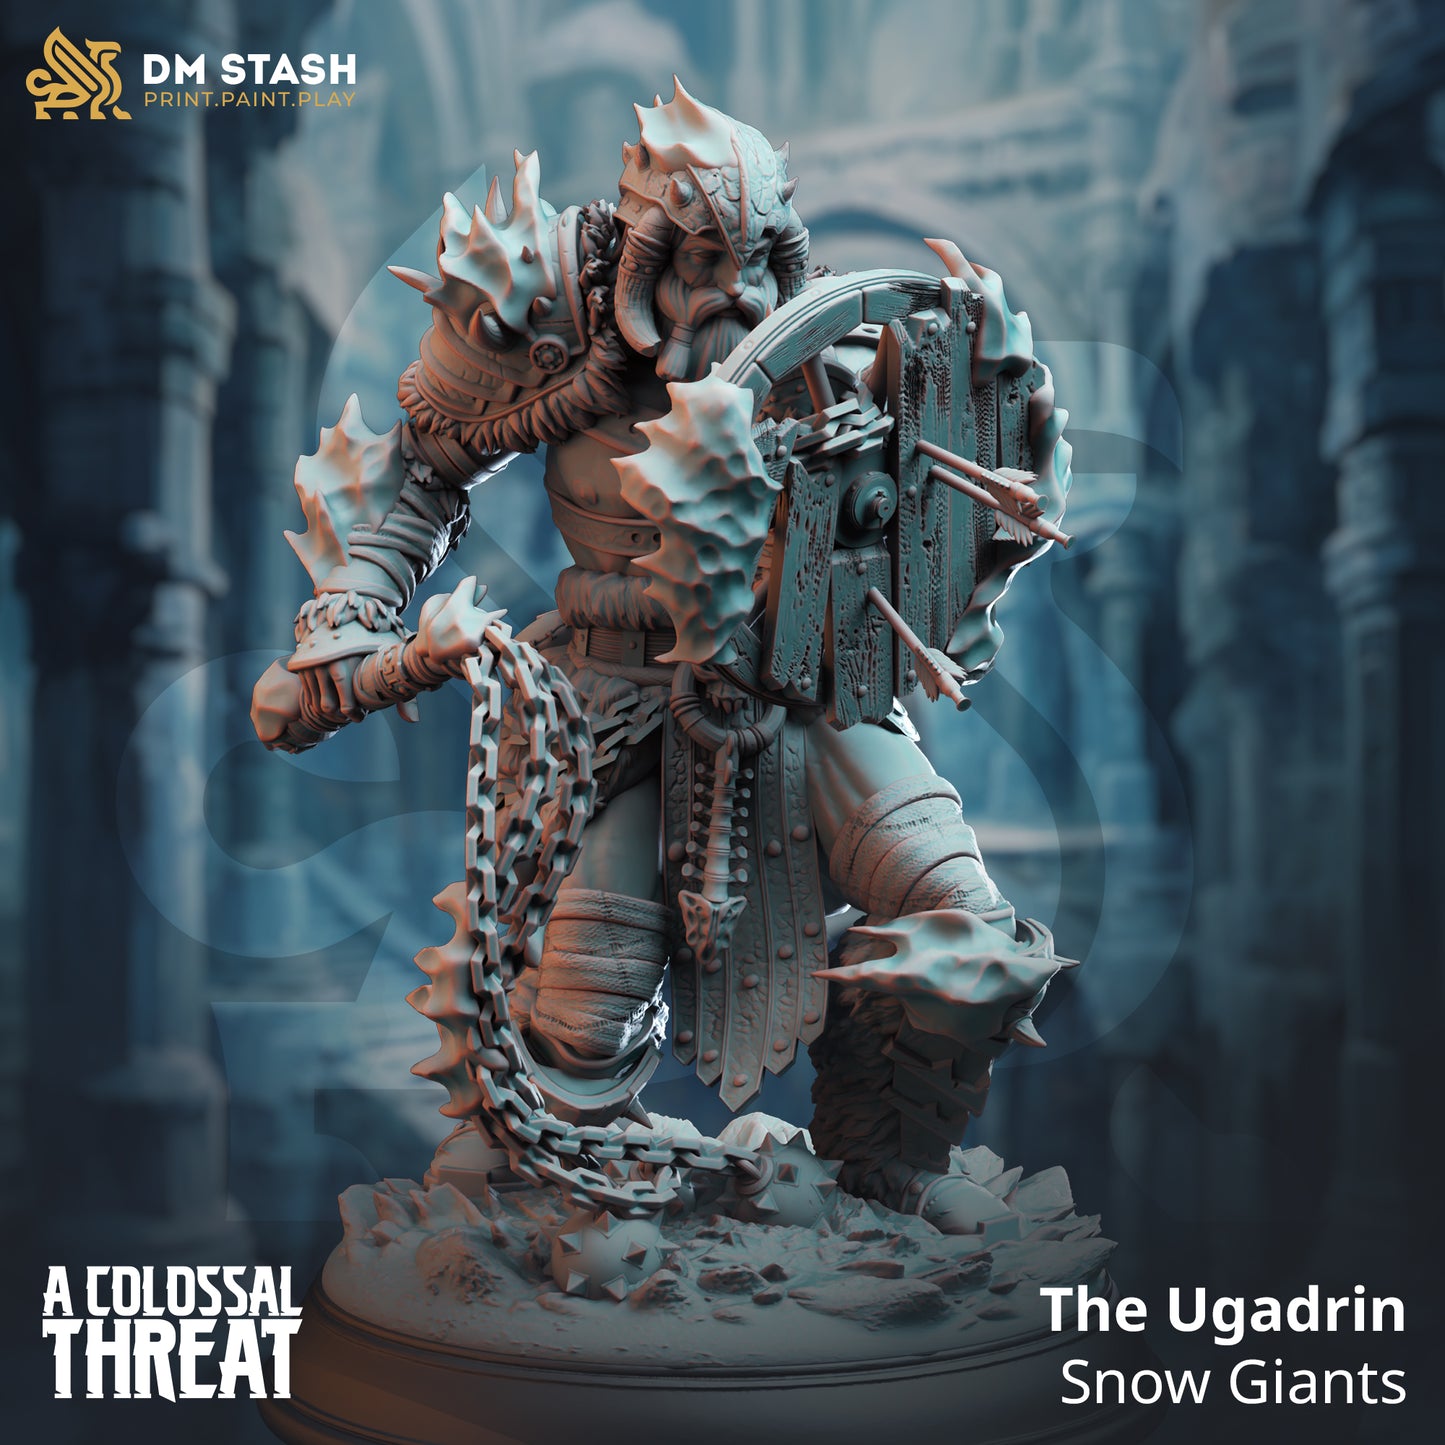 The Ugadrin Snow Giants